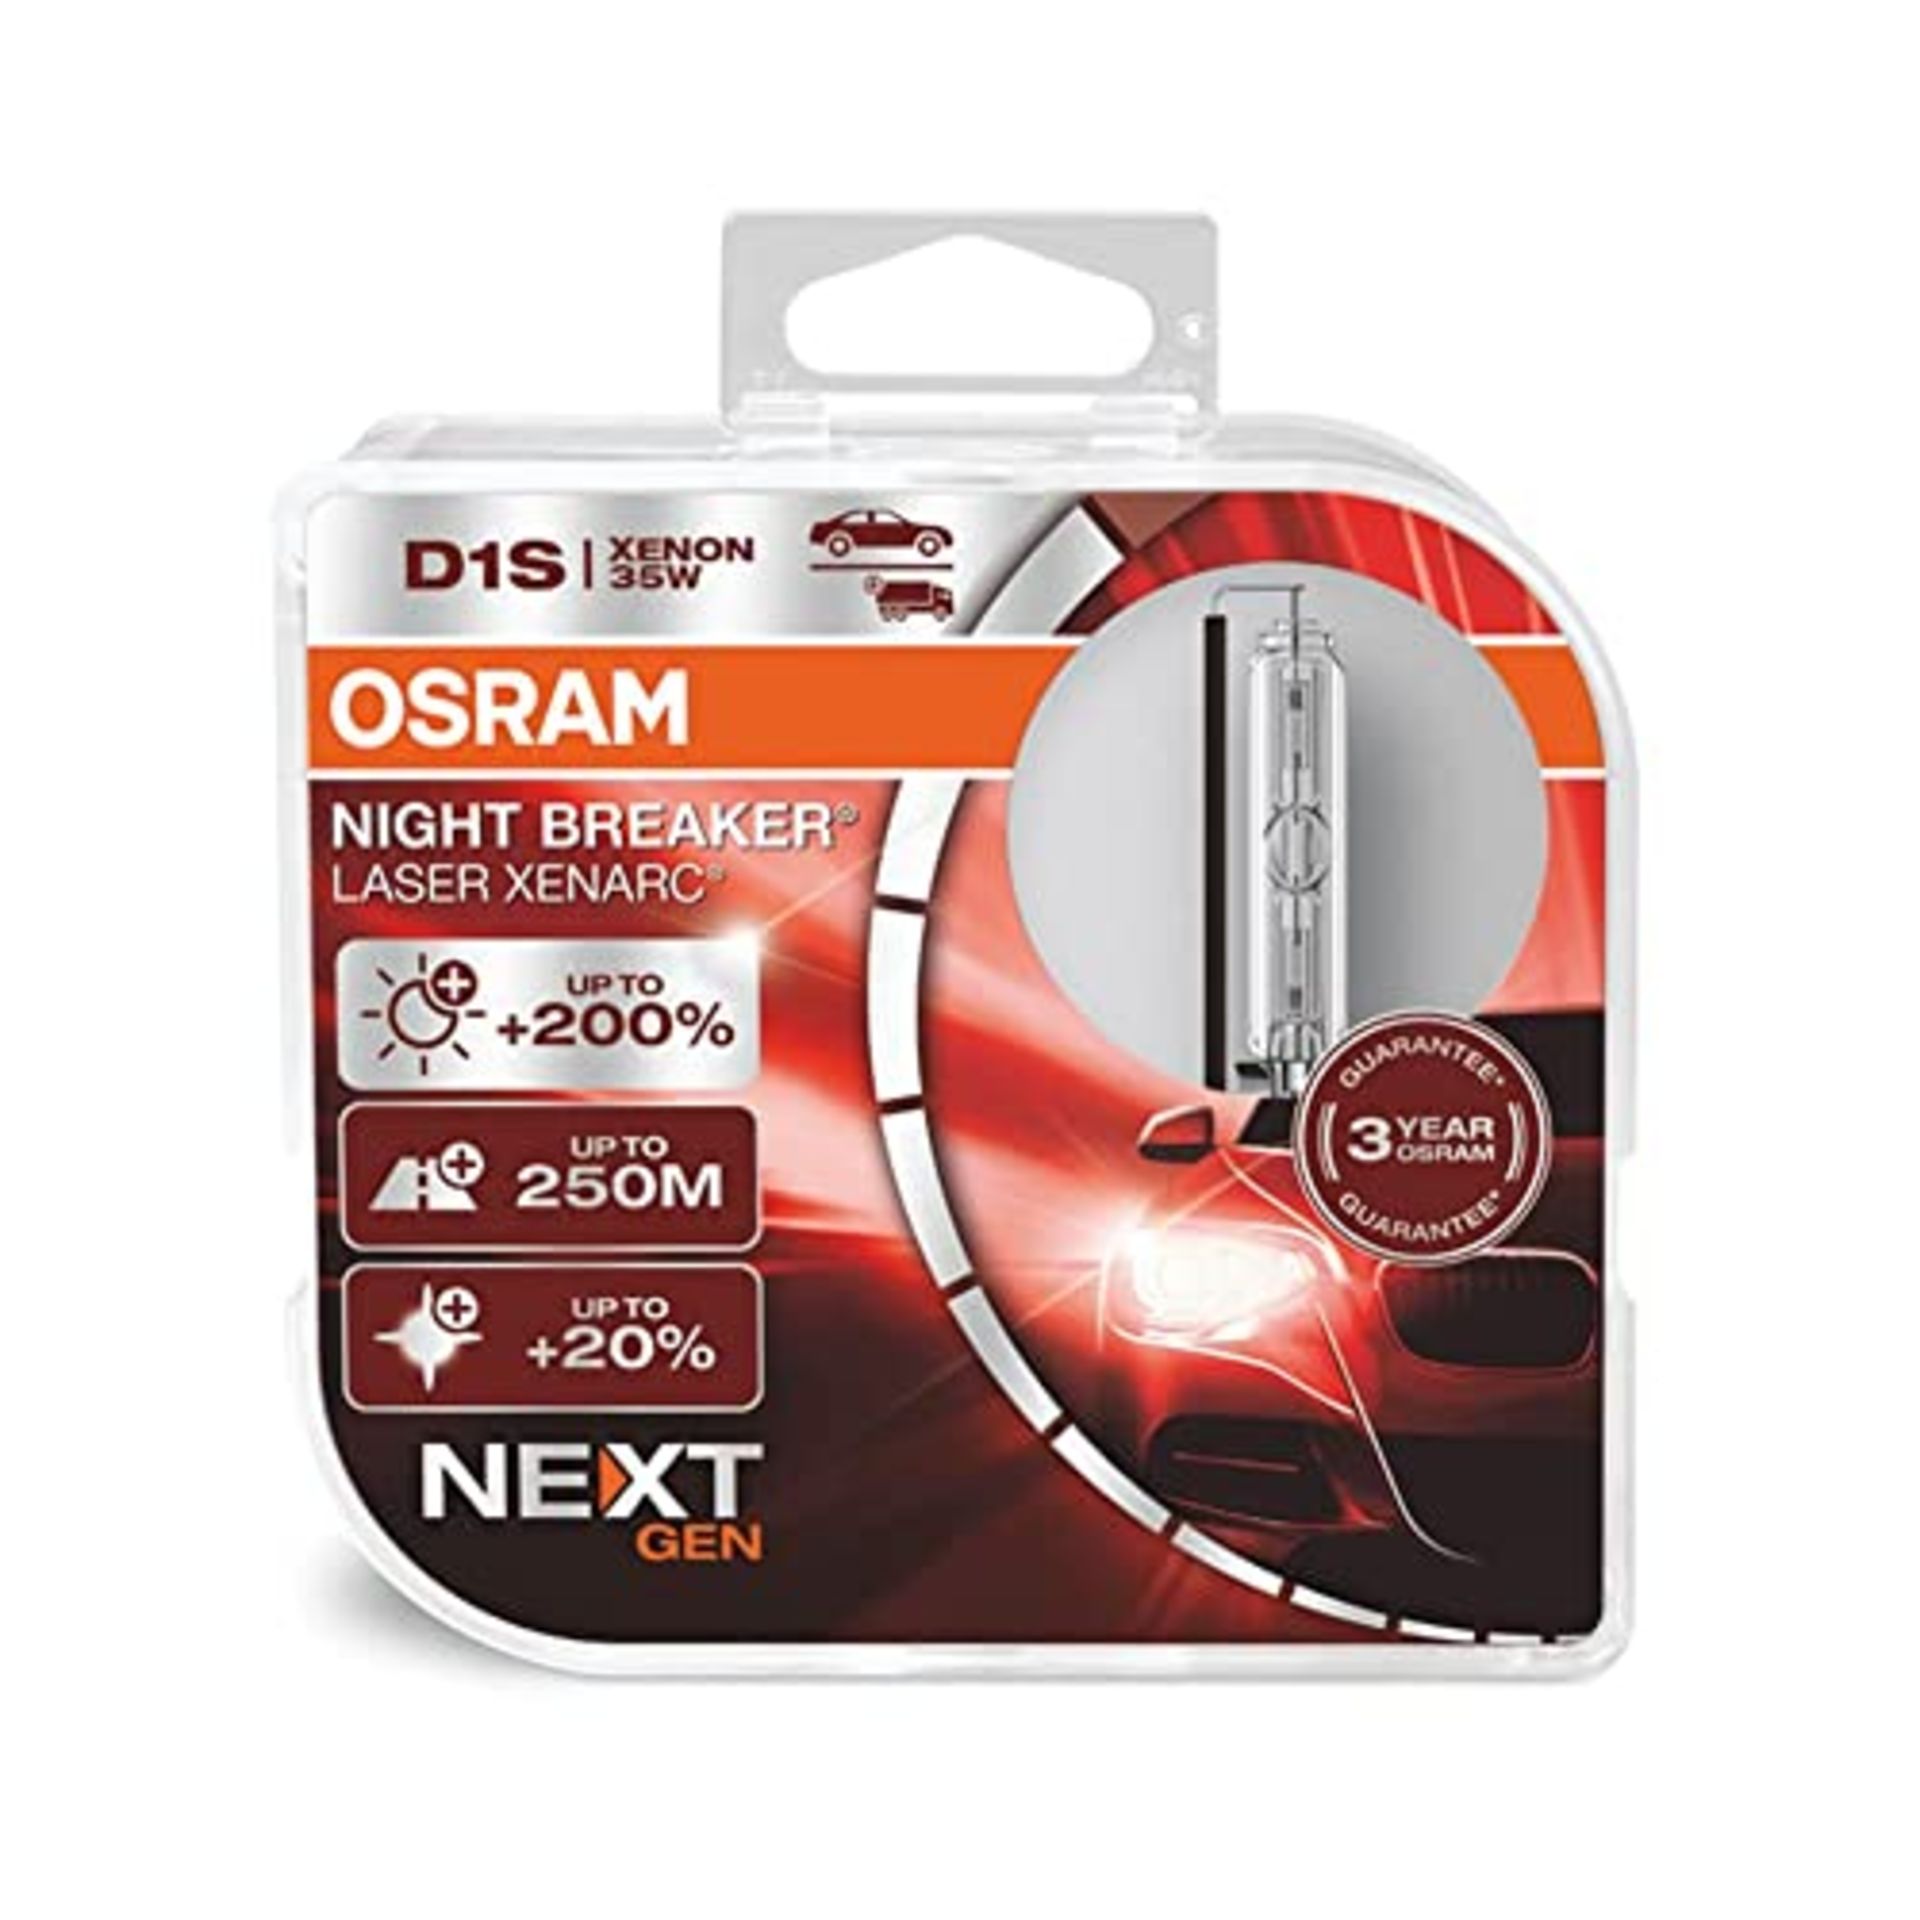 RRP £138.00 OSRAM XENARC NIGHT BREAKER LASER D1S, Next Generation, 200% more brightness, HID xenon